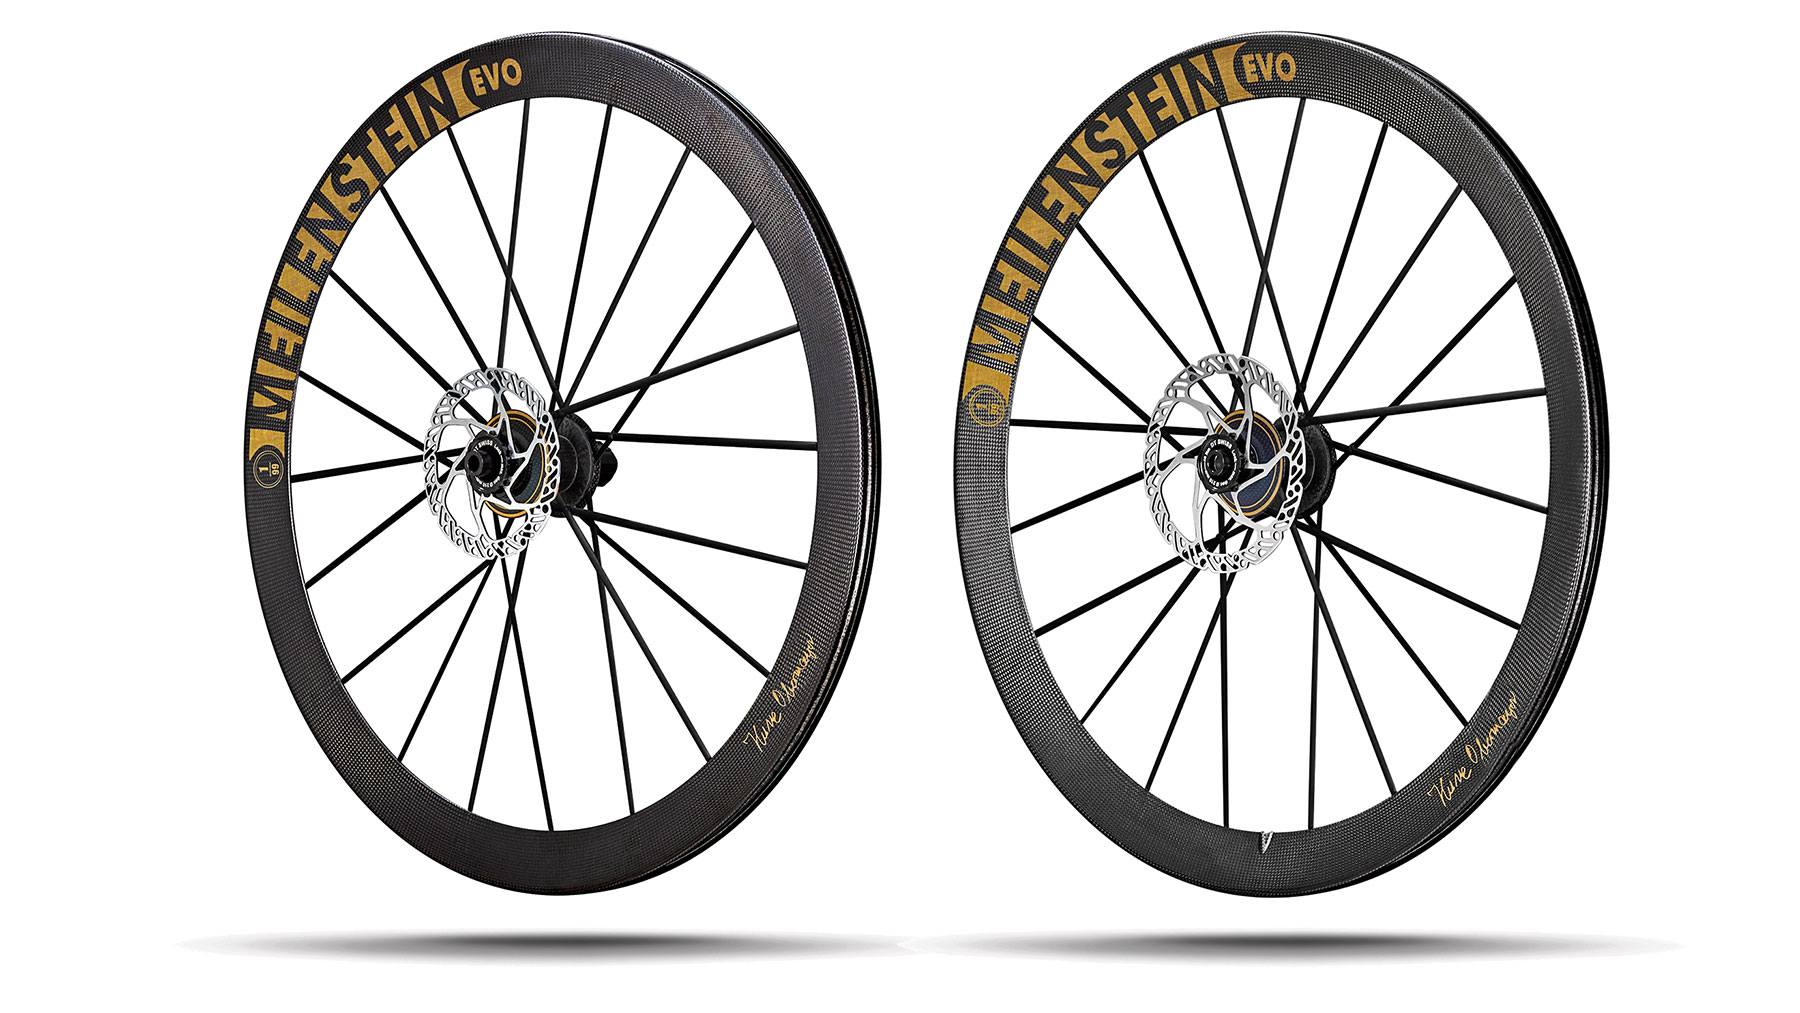 Lightweight-Meilenstein-EVO-Signature-Edition-Gold-carbon-road-wheels_angled-pair.jpg